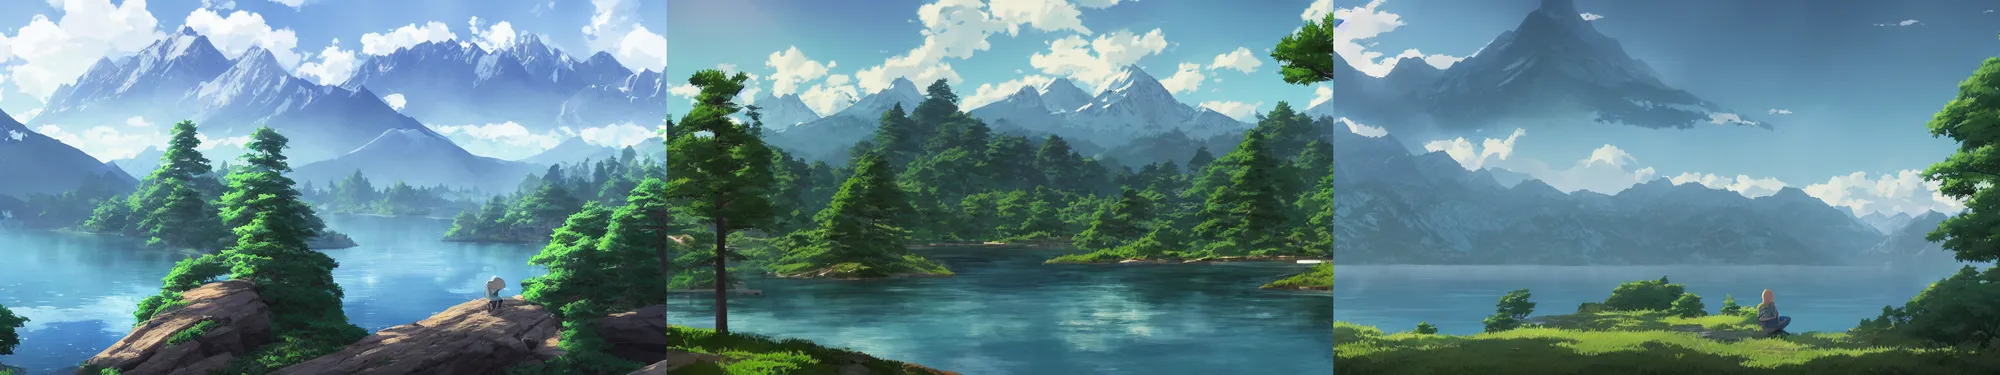 Prompt: mountains, trees, and lake, by makoto shinkai